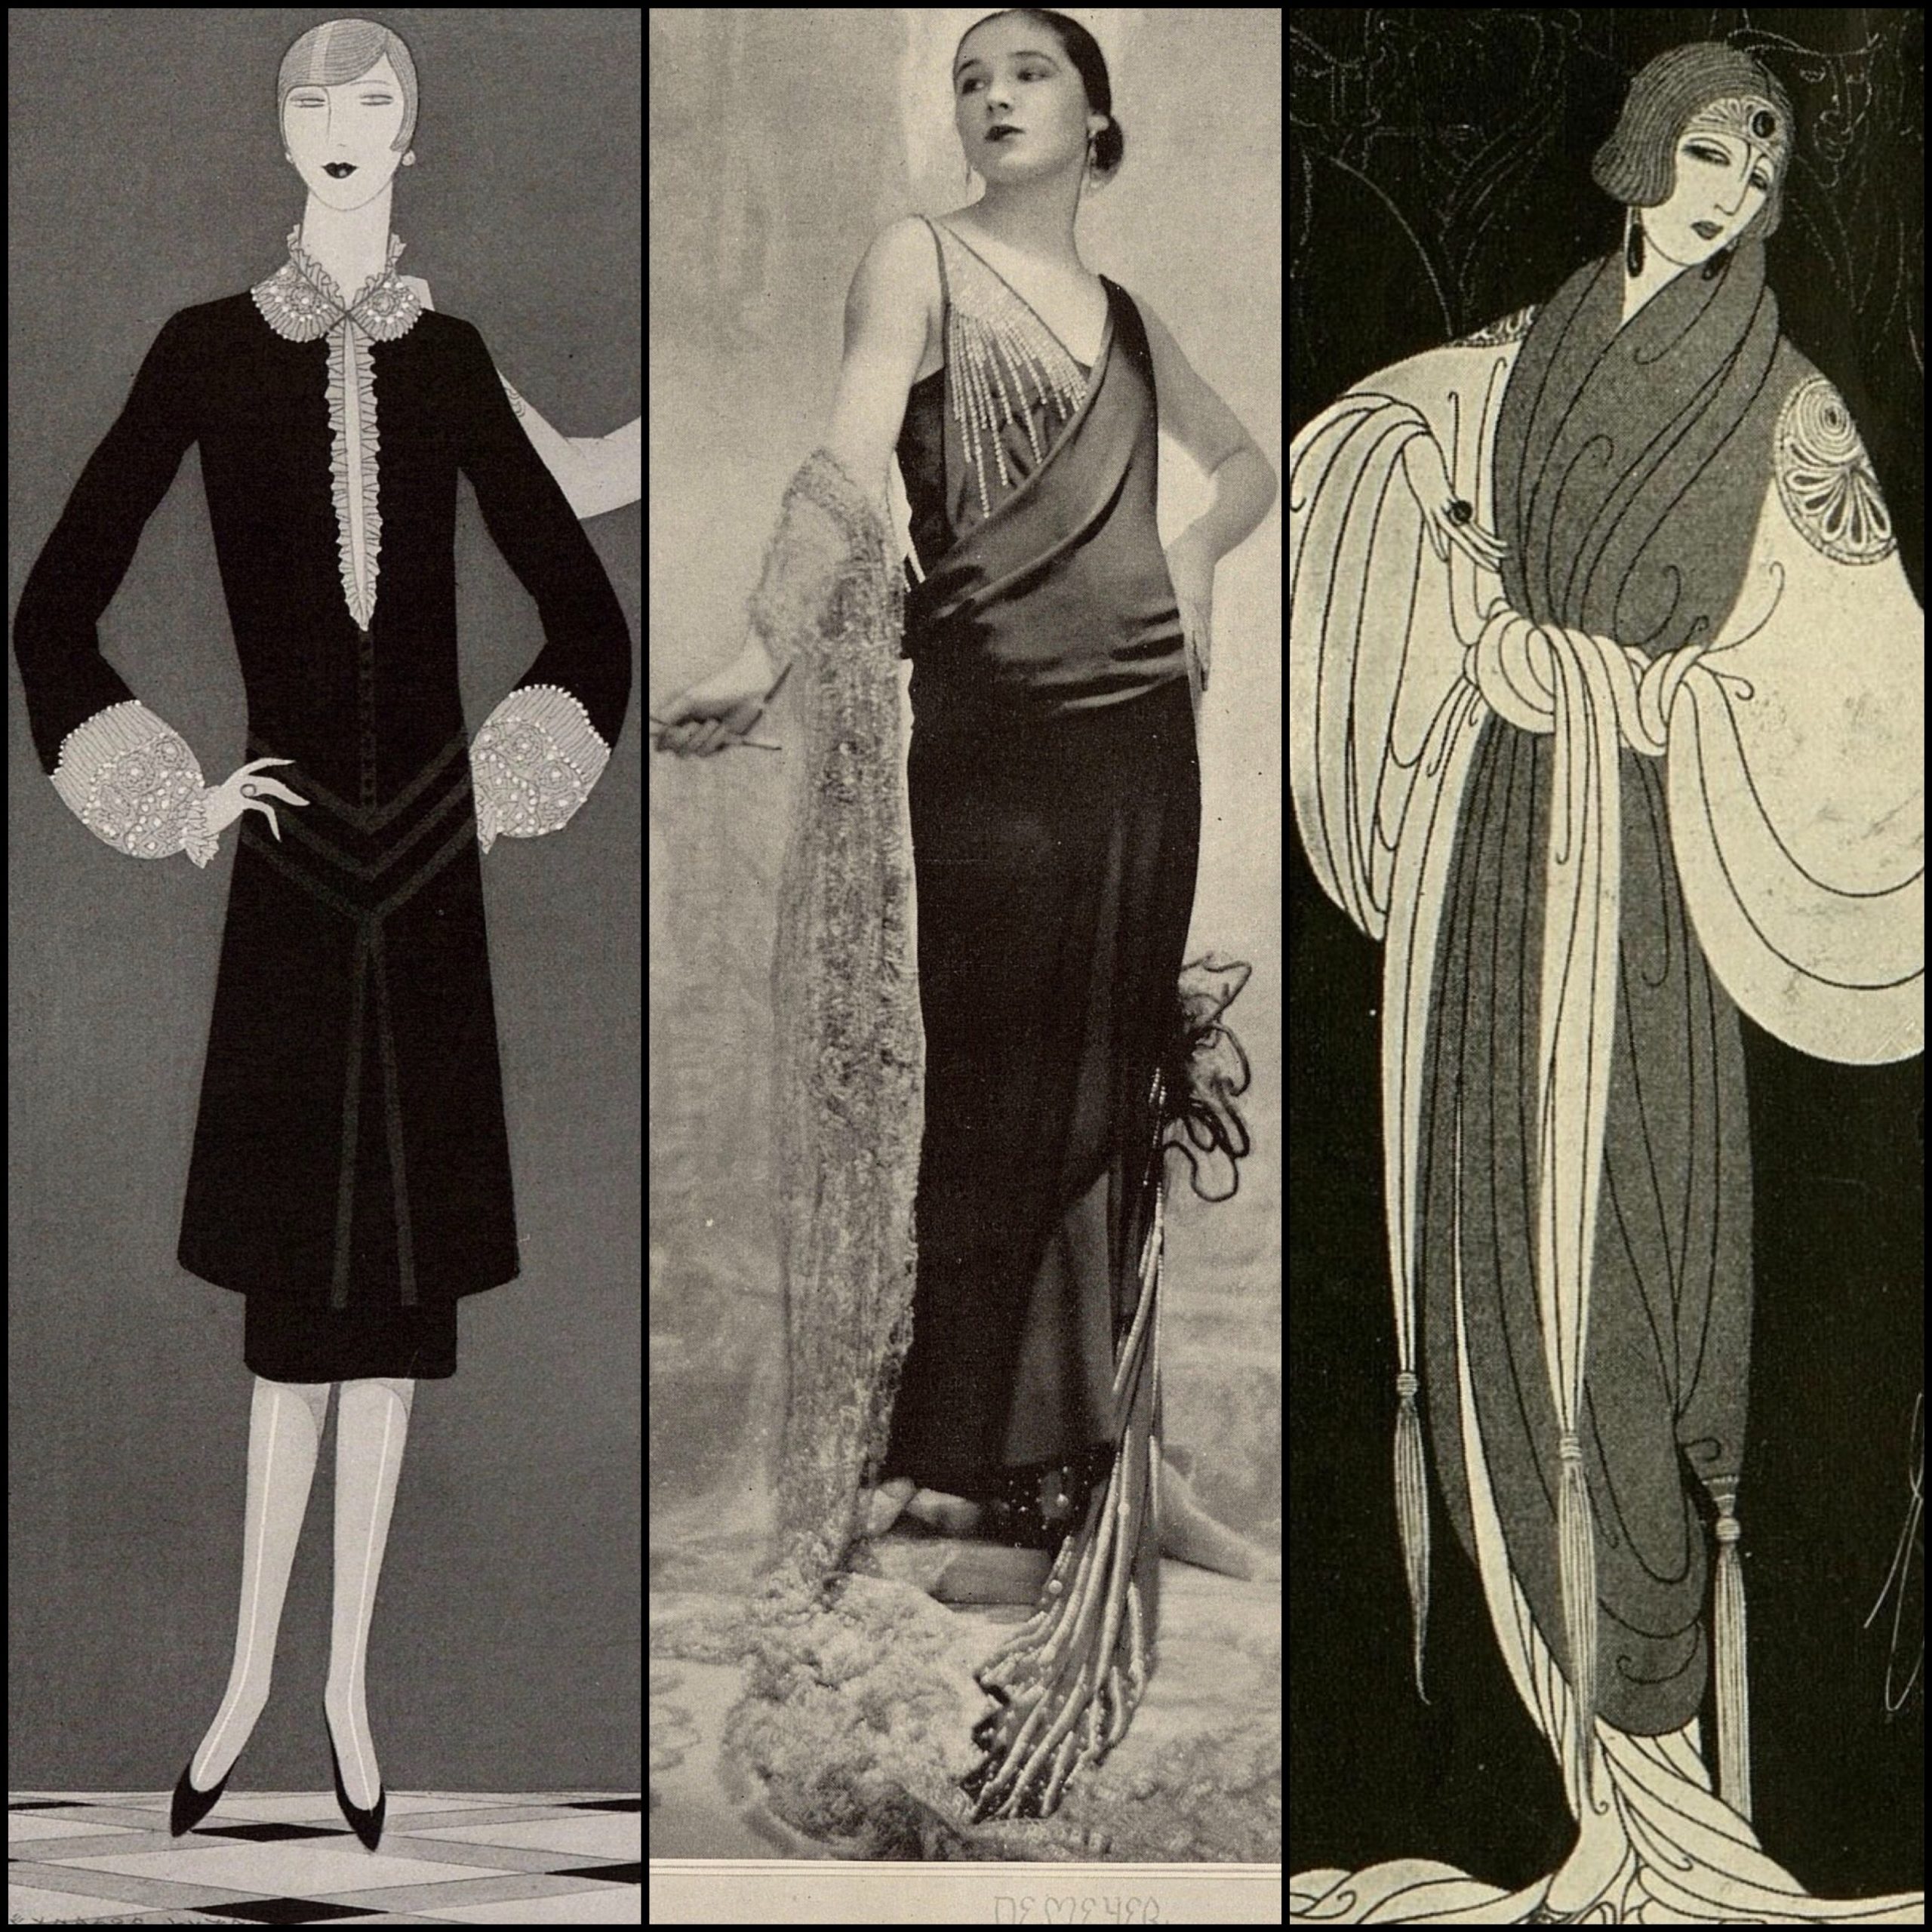 Editorial Harmony: Interwar Fashion Spreads - Fashion Interpretations